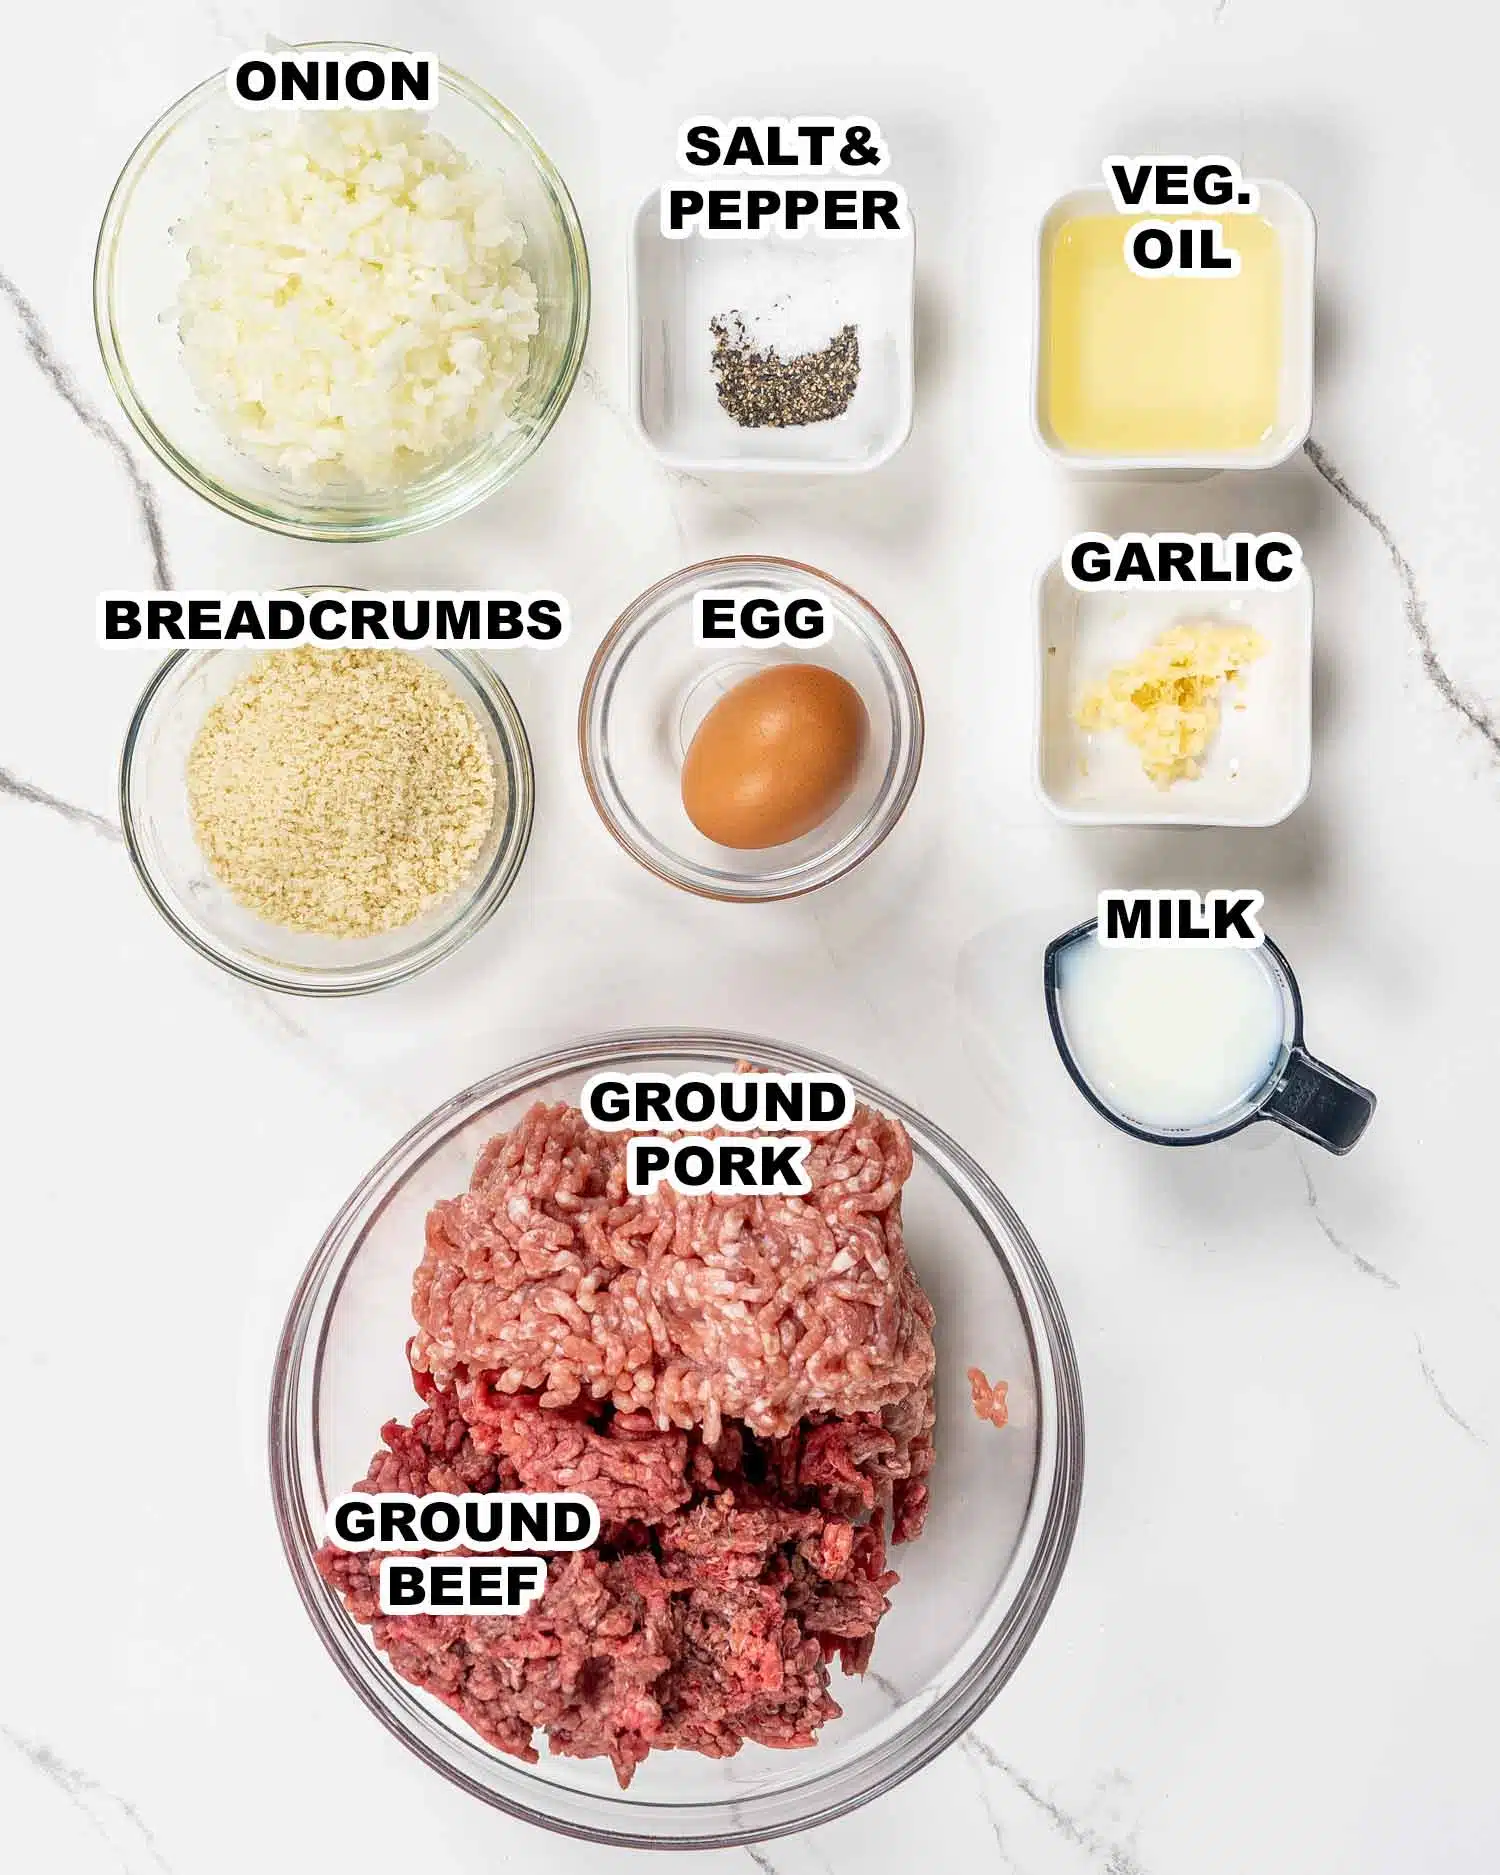 ingredients needed to make swedish meatballs.